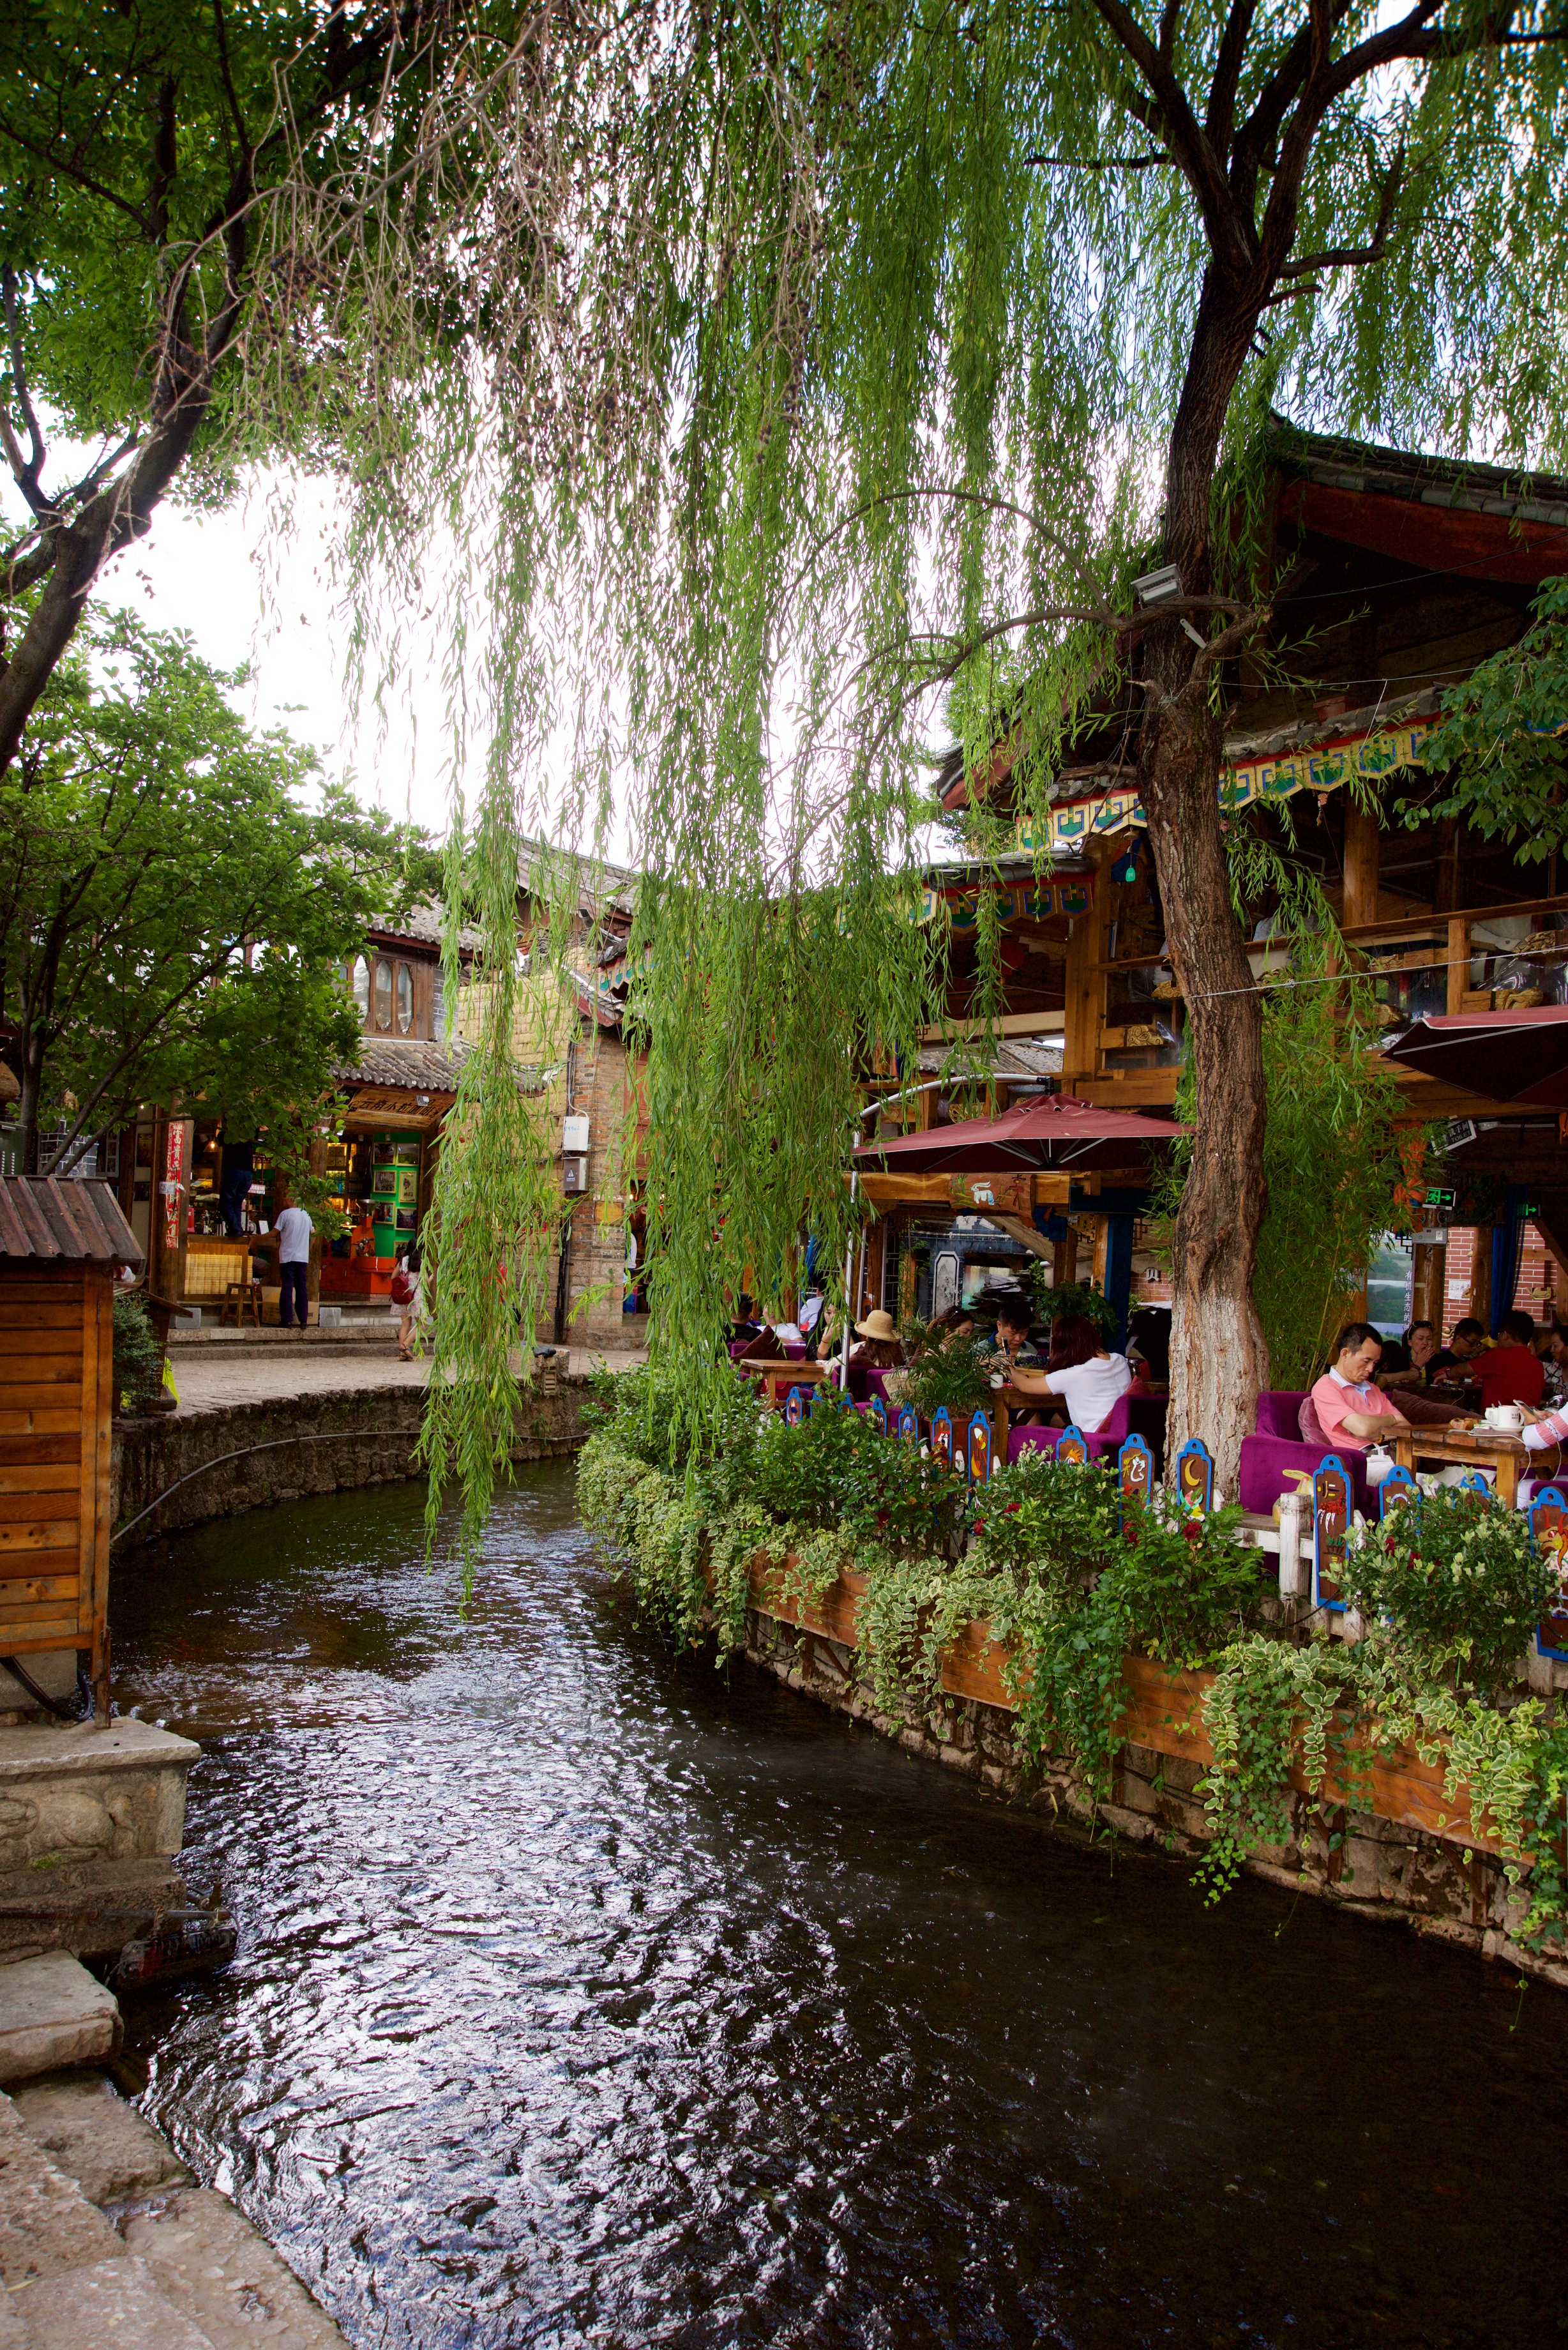  Rivulet of the Jinsha River,&nbsp;Dayan, Old town of Lijiang 